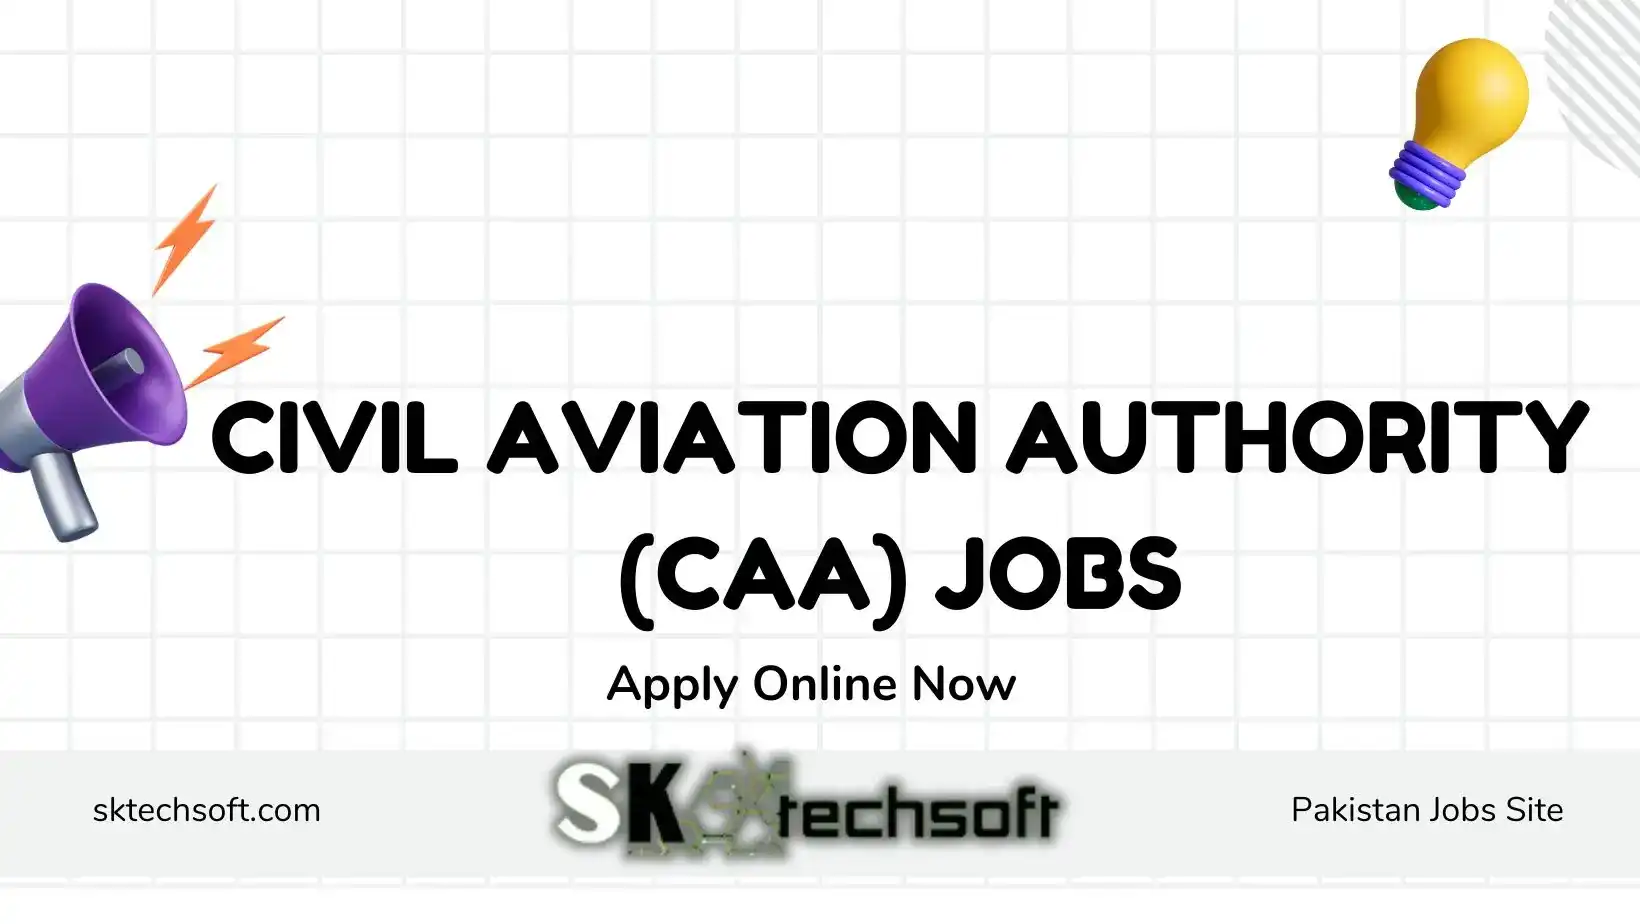 Civil Aviation Authority (CAA) Jobs